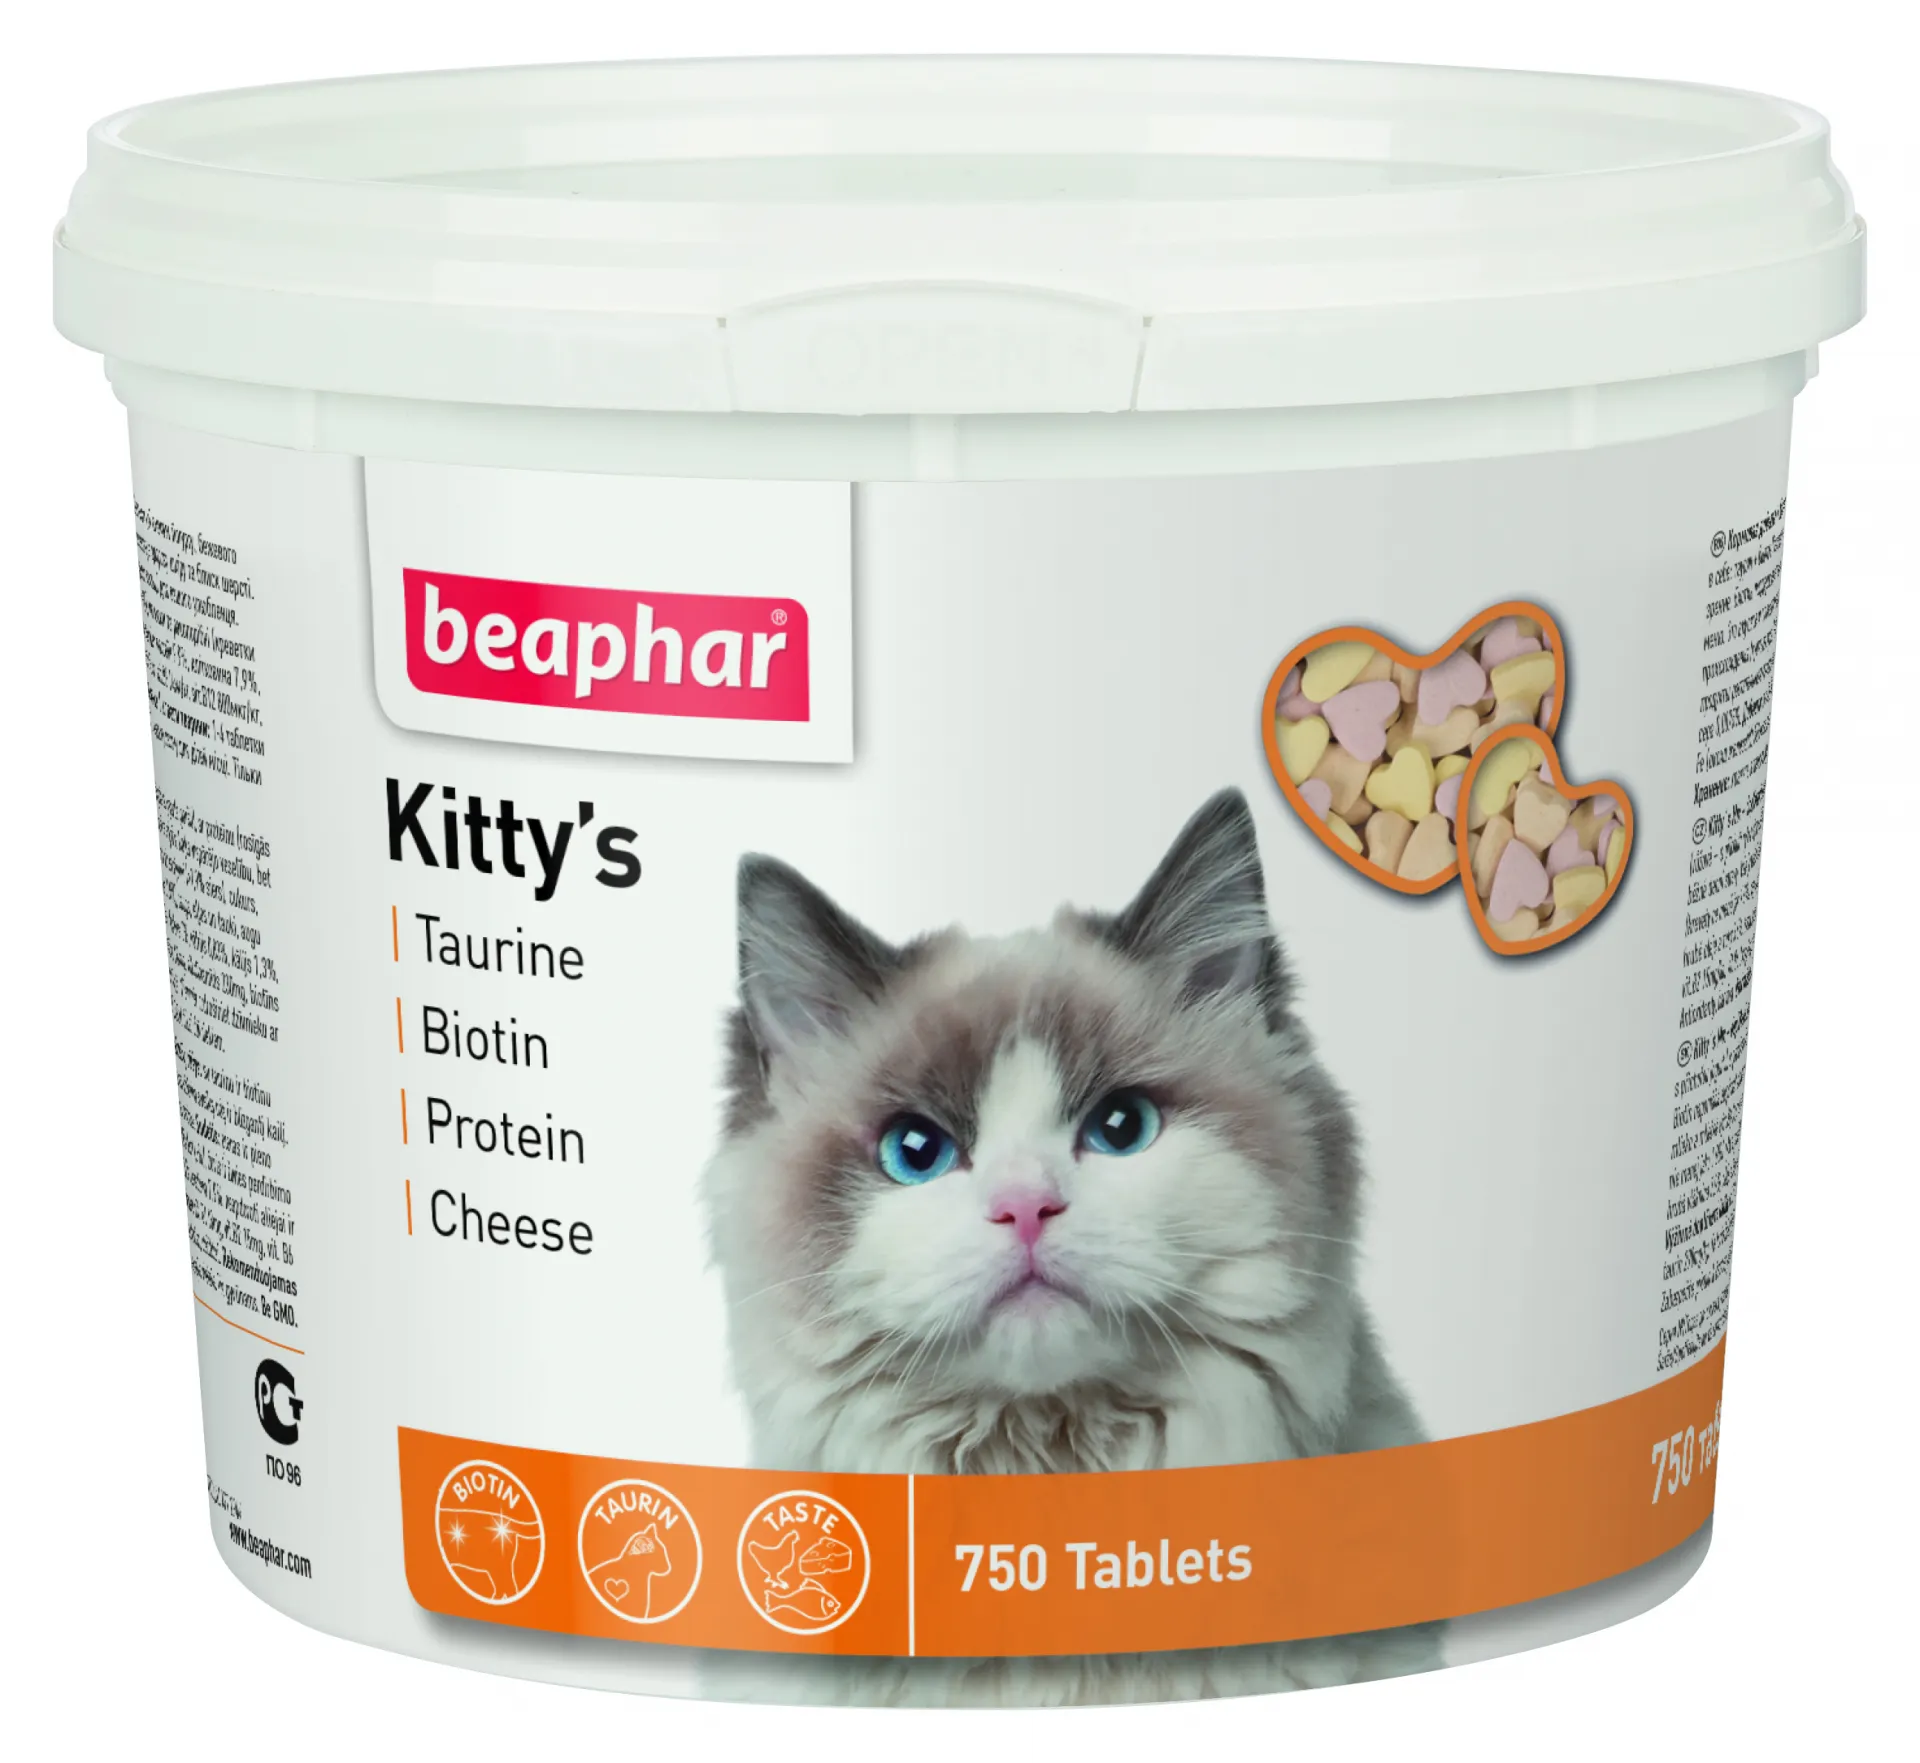 Beaphar Kittys Taurine Biotine Protein Cheese - Витаминно лакомство за котки с таурин, биотин, протеини и сирене 750 таблетки